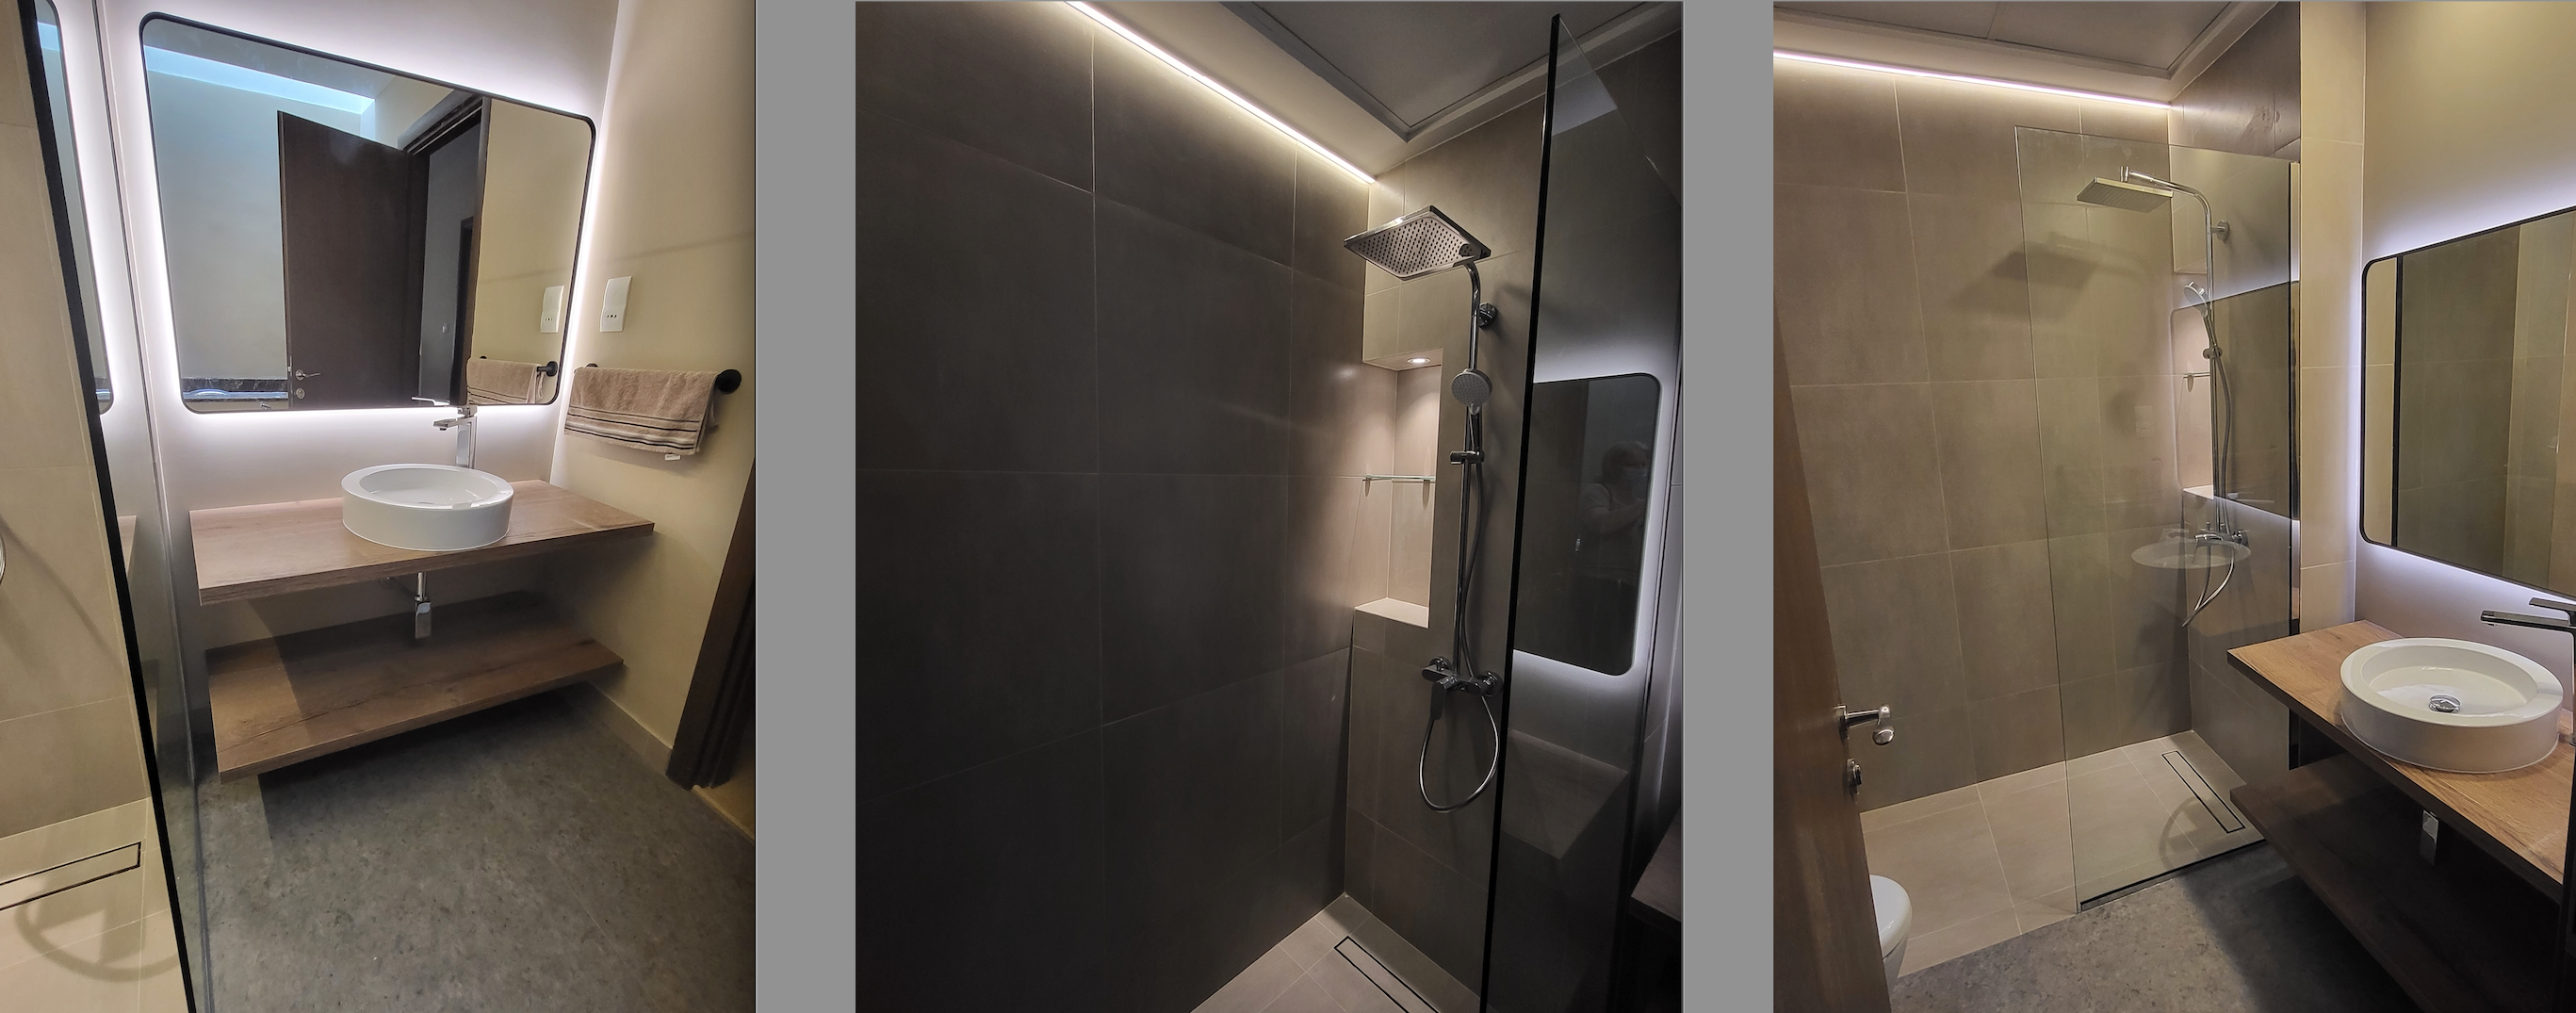 silicon oasis bathroom remodeling cedre villas, villa renovation dubai springs meadoes, interior designer dubai